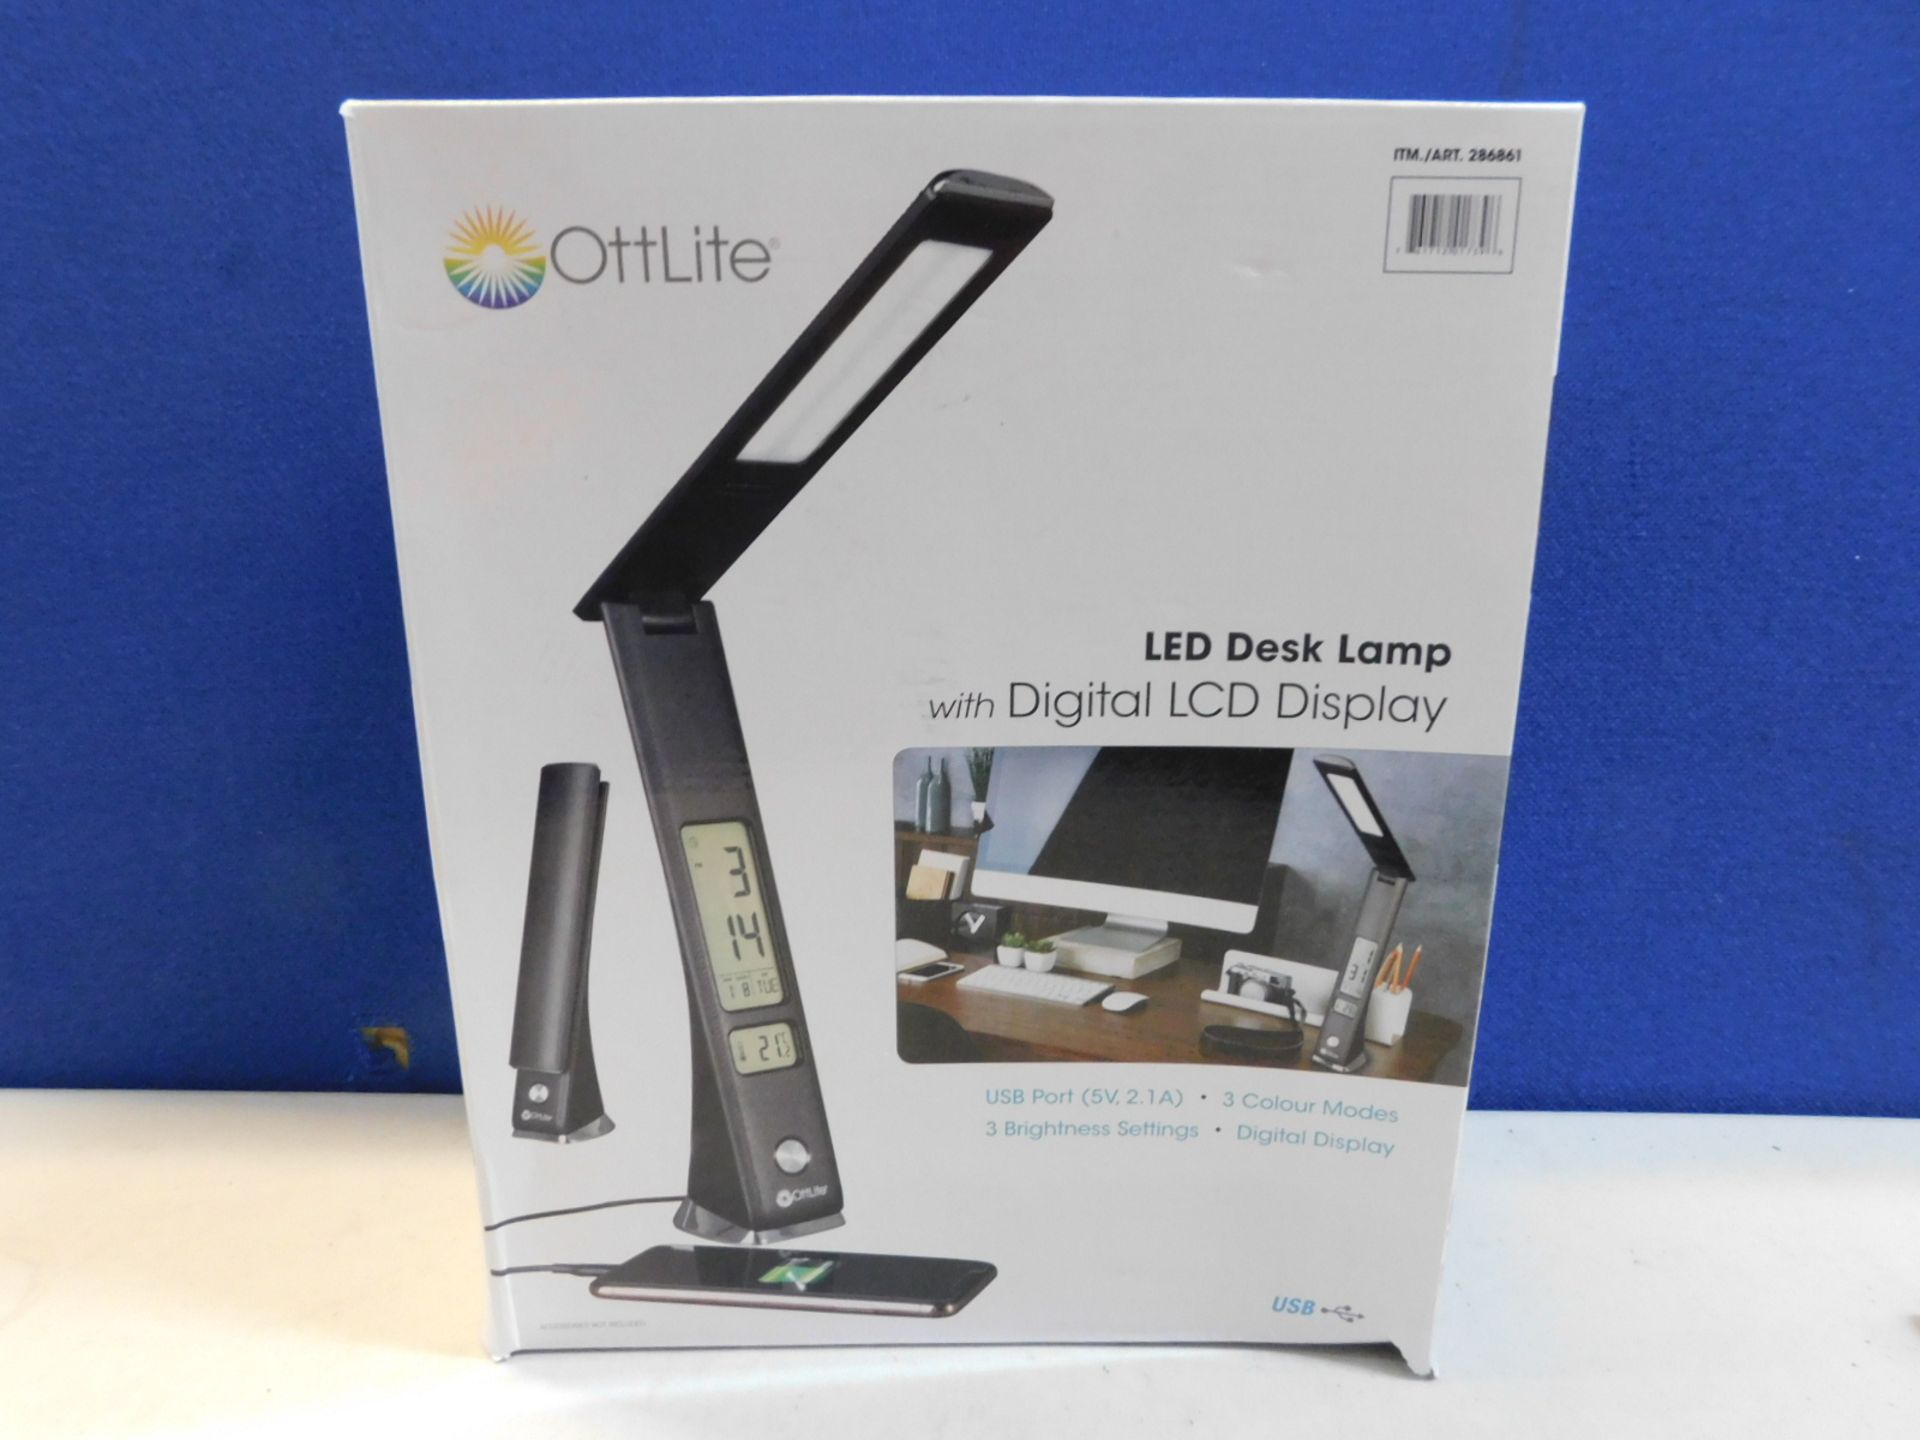 1 BOXED OTTLITE LED DESK LAMP WITH DIGITAL LCD DISPLAY RRP Â£49.99